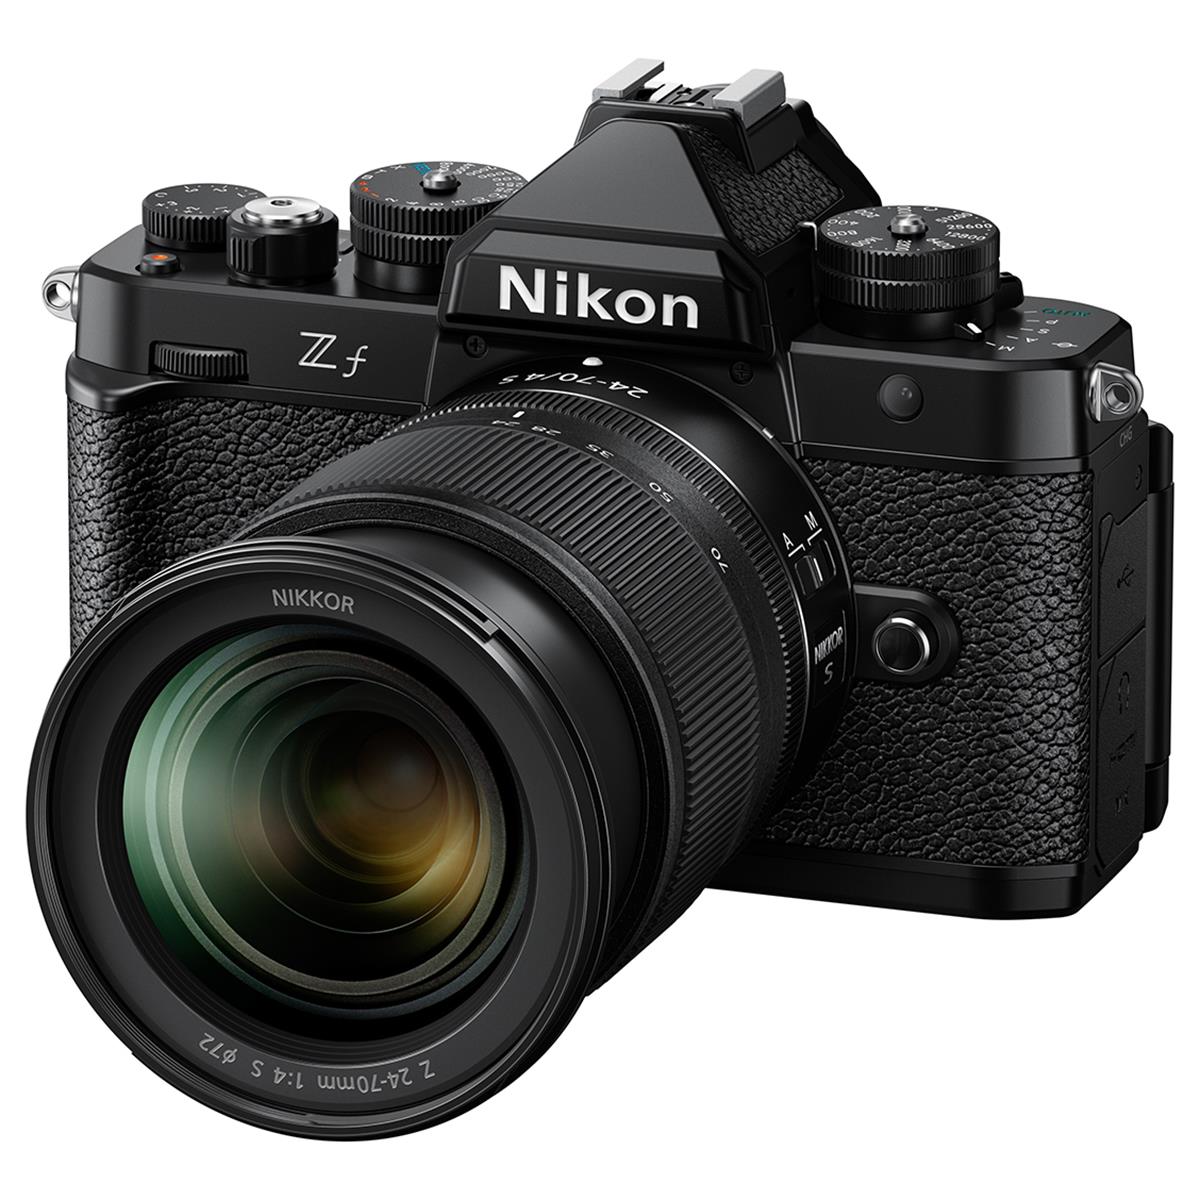 Image of Nikon Z f Mirrorless Camera with NIKKOR Z 24-70mm f/4 S Lens